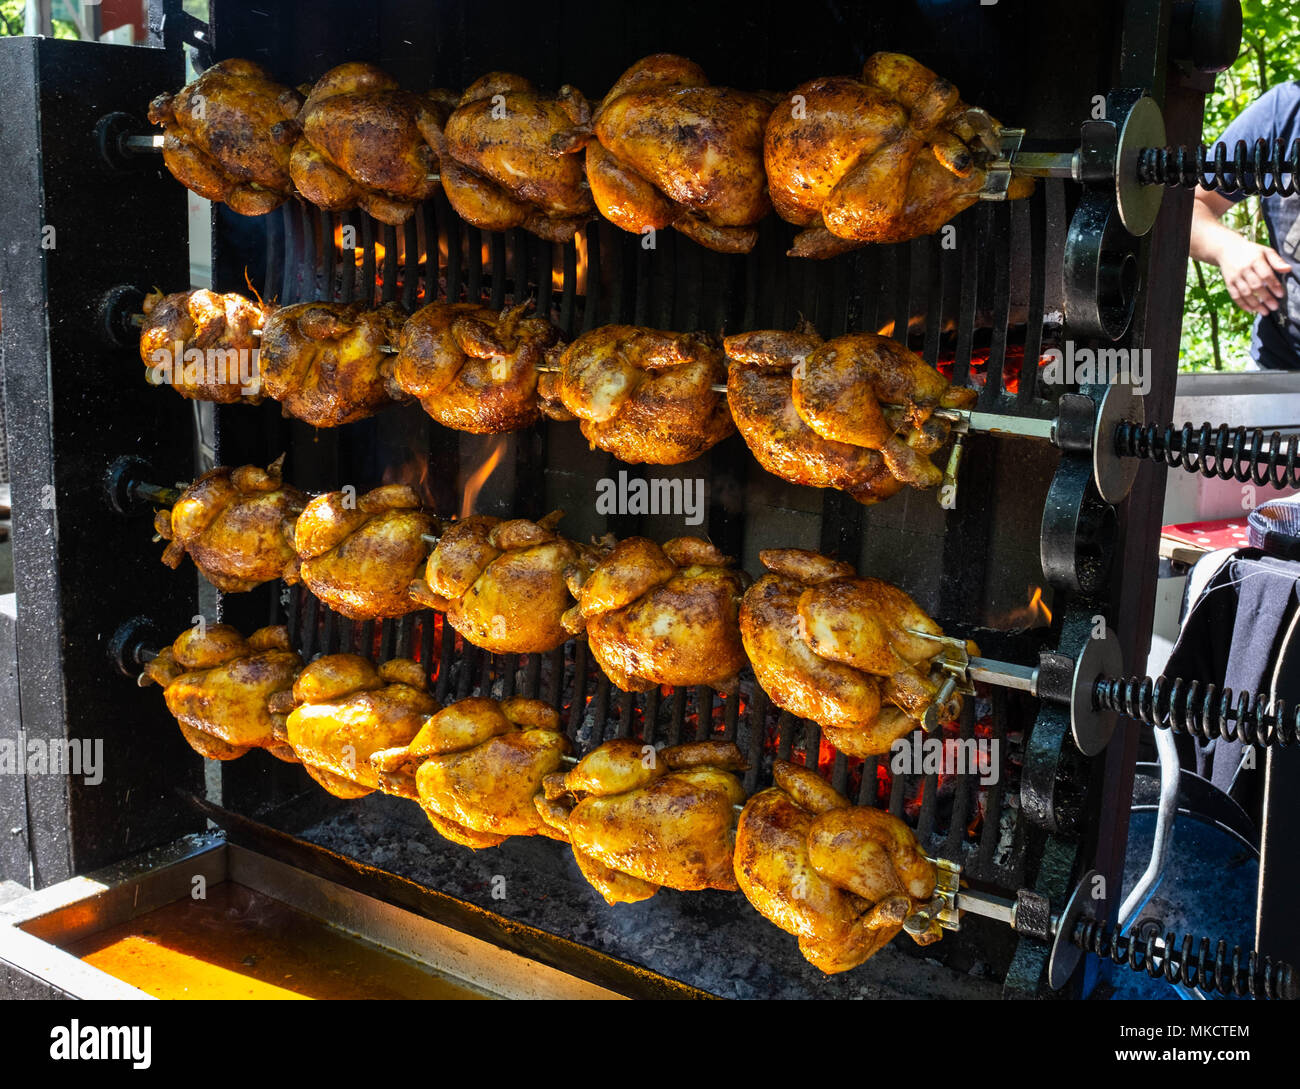 https://c8.alamy.com/comp/MKCTEM/rotisserie-chicken-at-amsterdam-street-food-market-MKCTEM.jpg